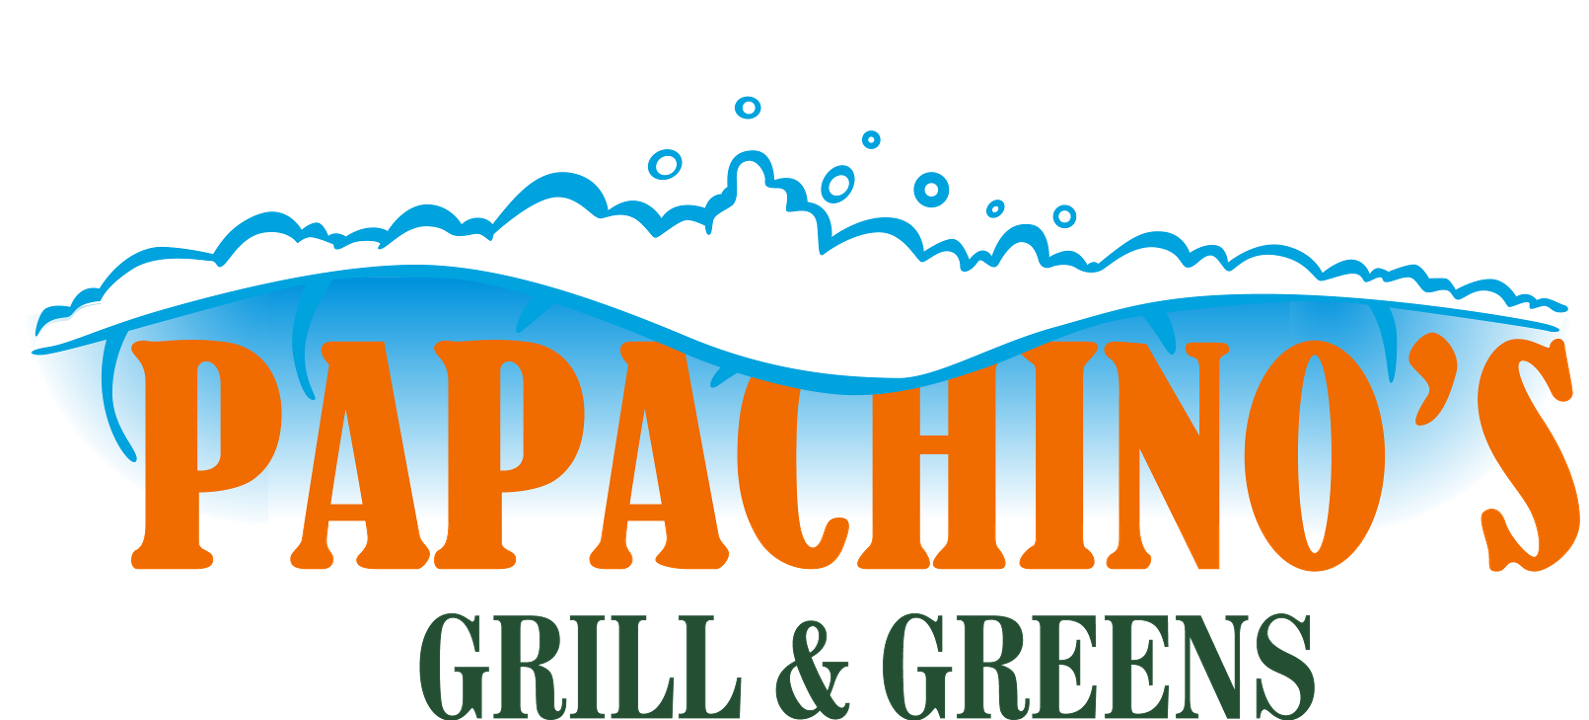 Papachino's Grill & Greens